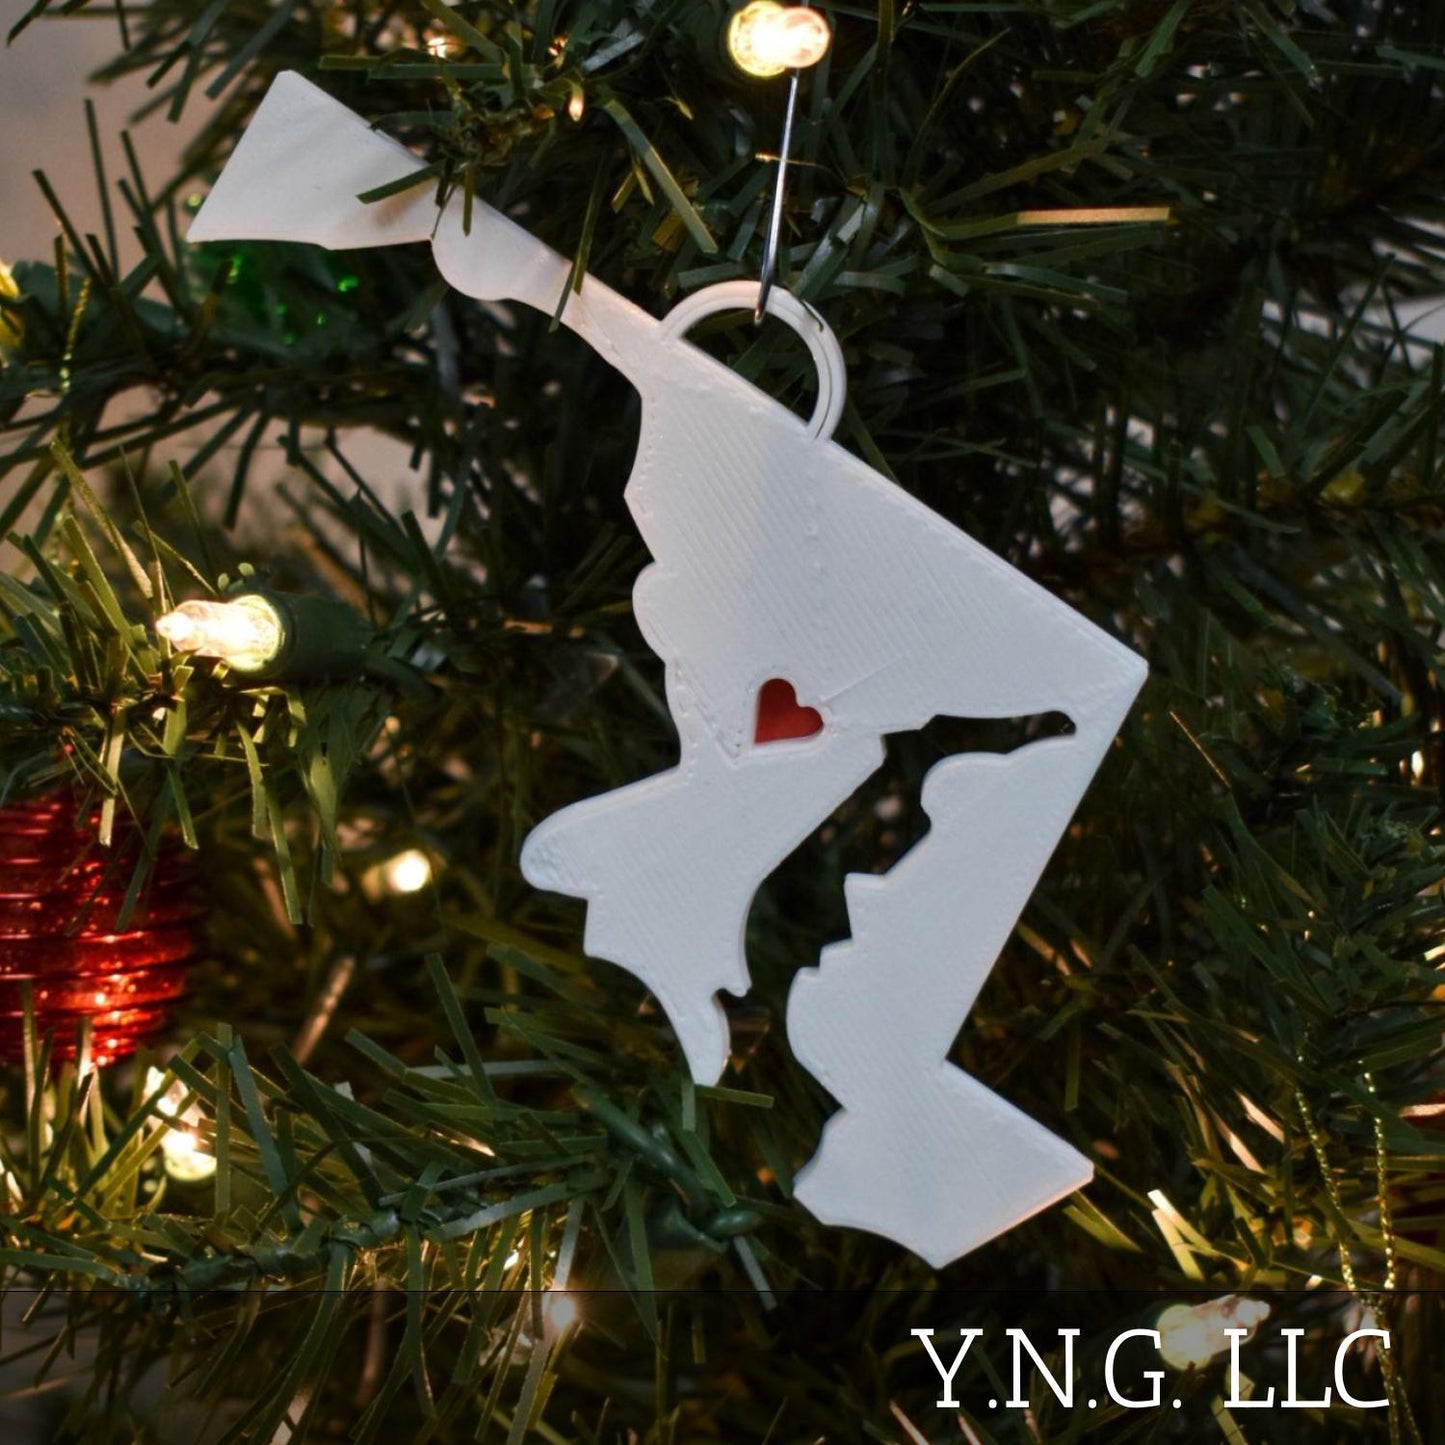 Maryland State Annapolis Heart Ornament Christmas Decor USA PR244-MD